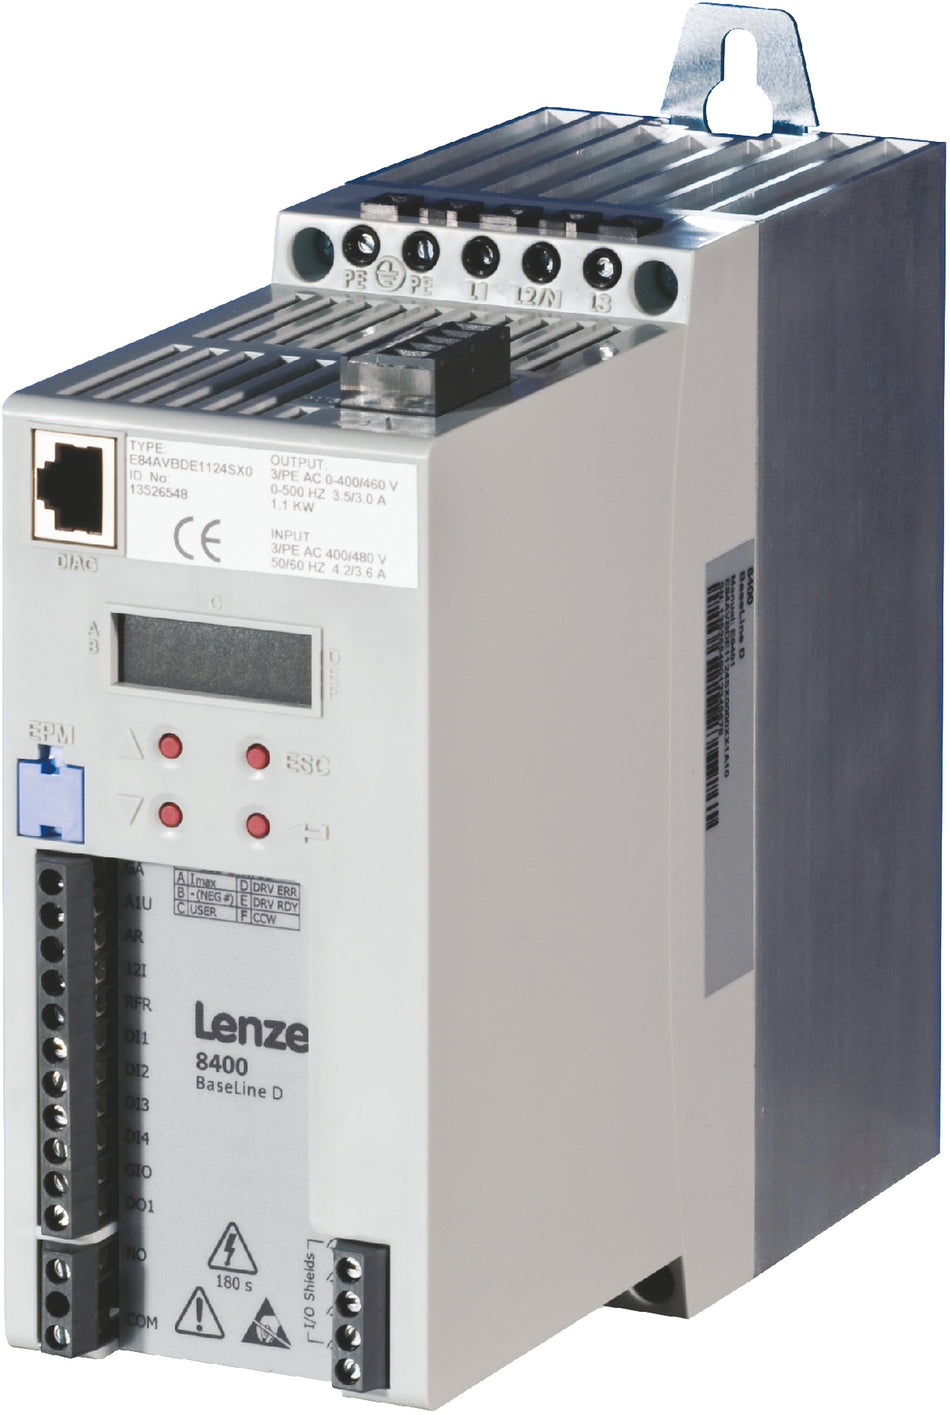 Lenze Inverter Drives 8400 BaseLine - E84AVBCE7512SX0XX3A34 0.75 kW